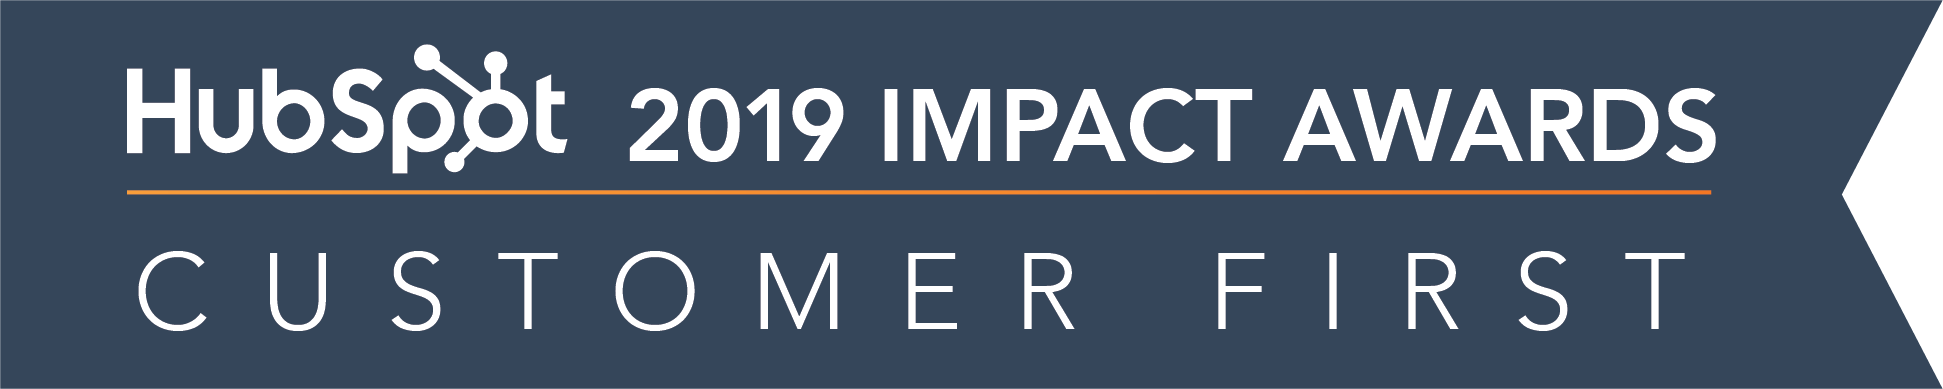 Hubspot_ImpactAwards_2019_CustomerFirst-02